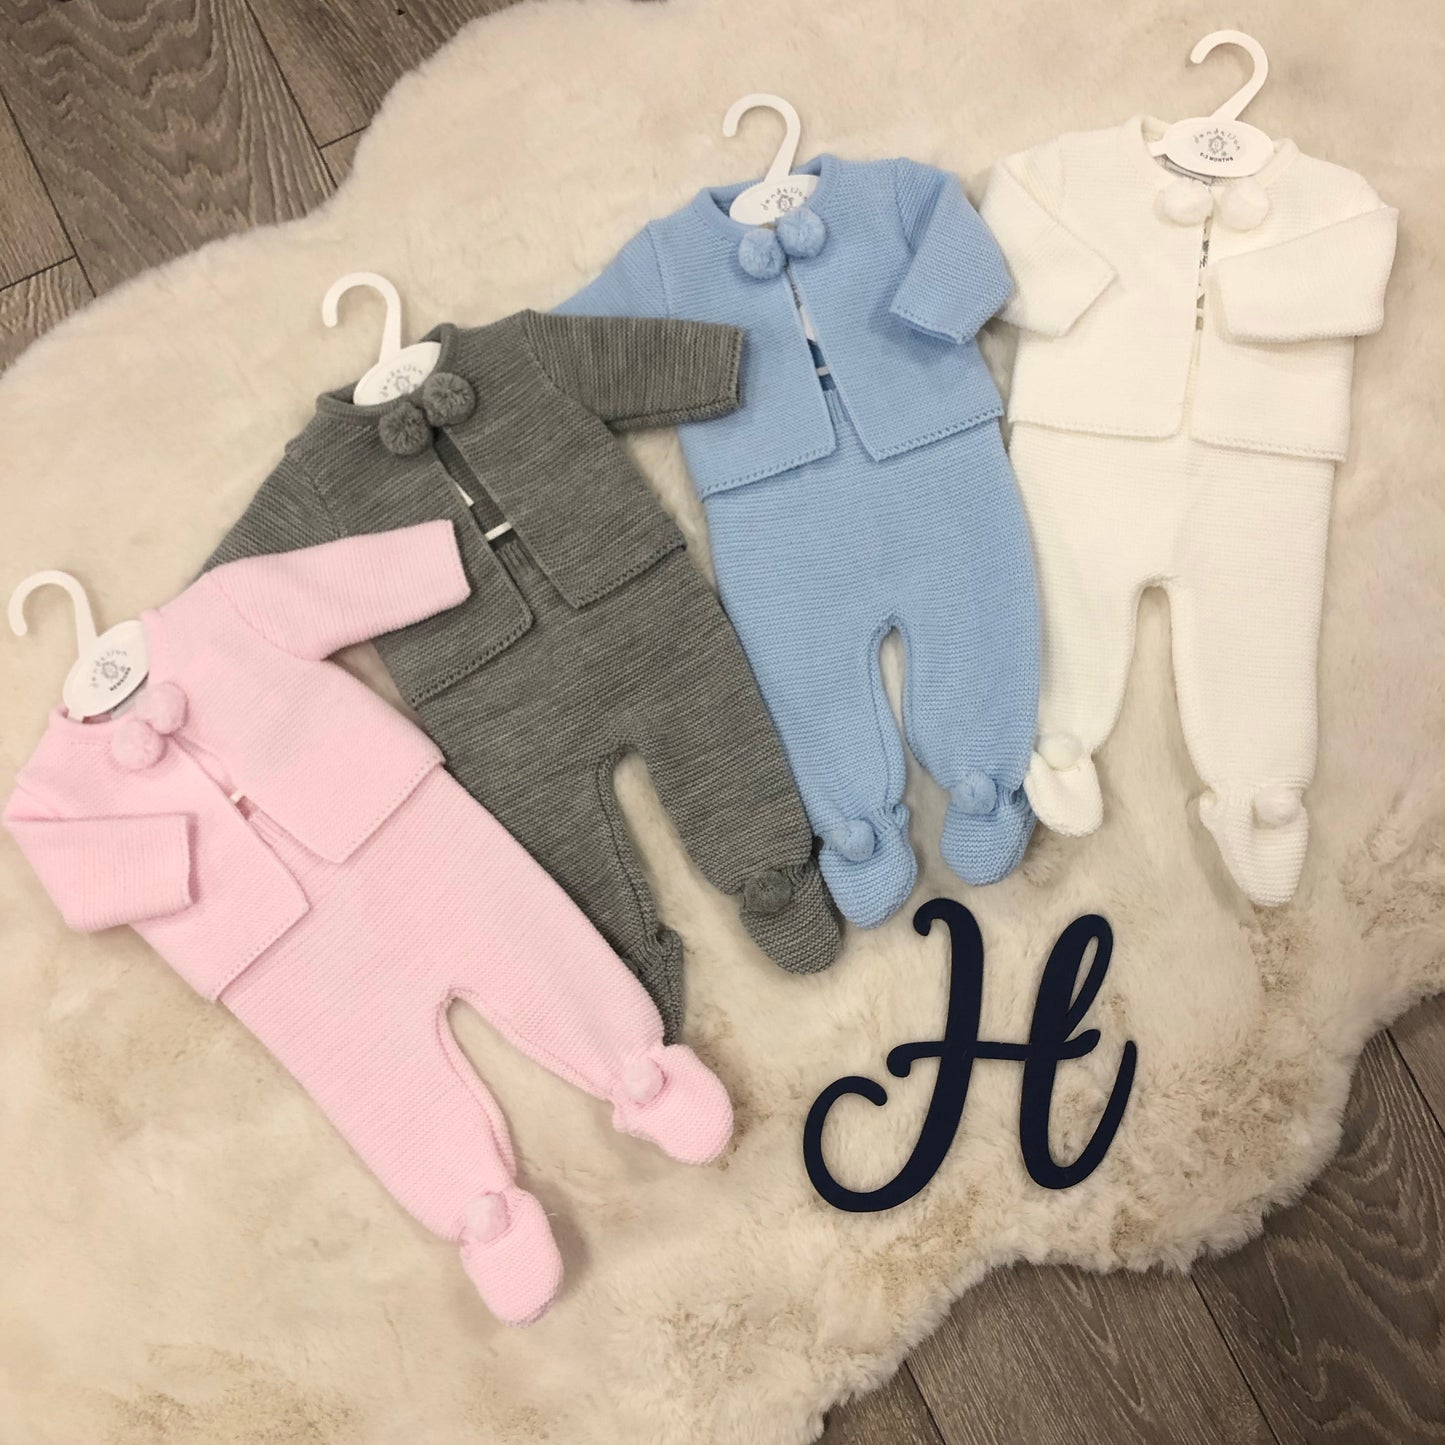 Dandelion Charley Grey Pom Pom Knitted Pram Suit - Hetty's Baby Boutique